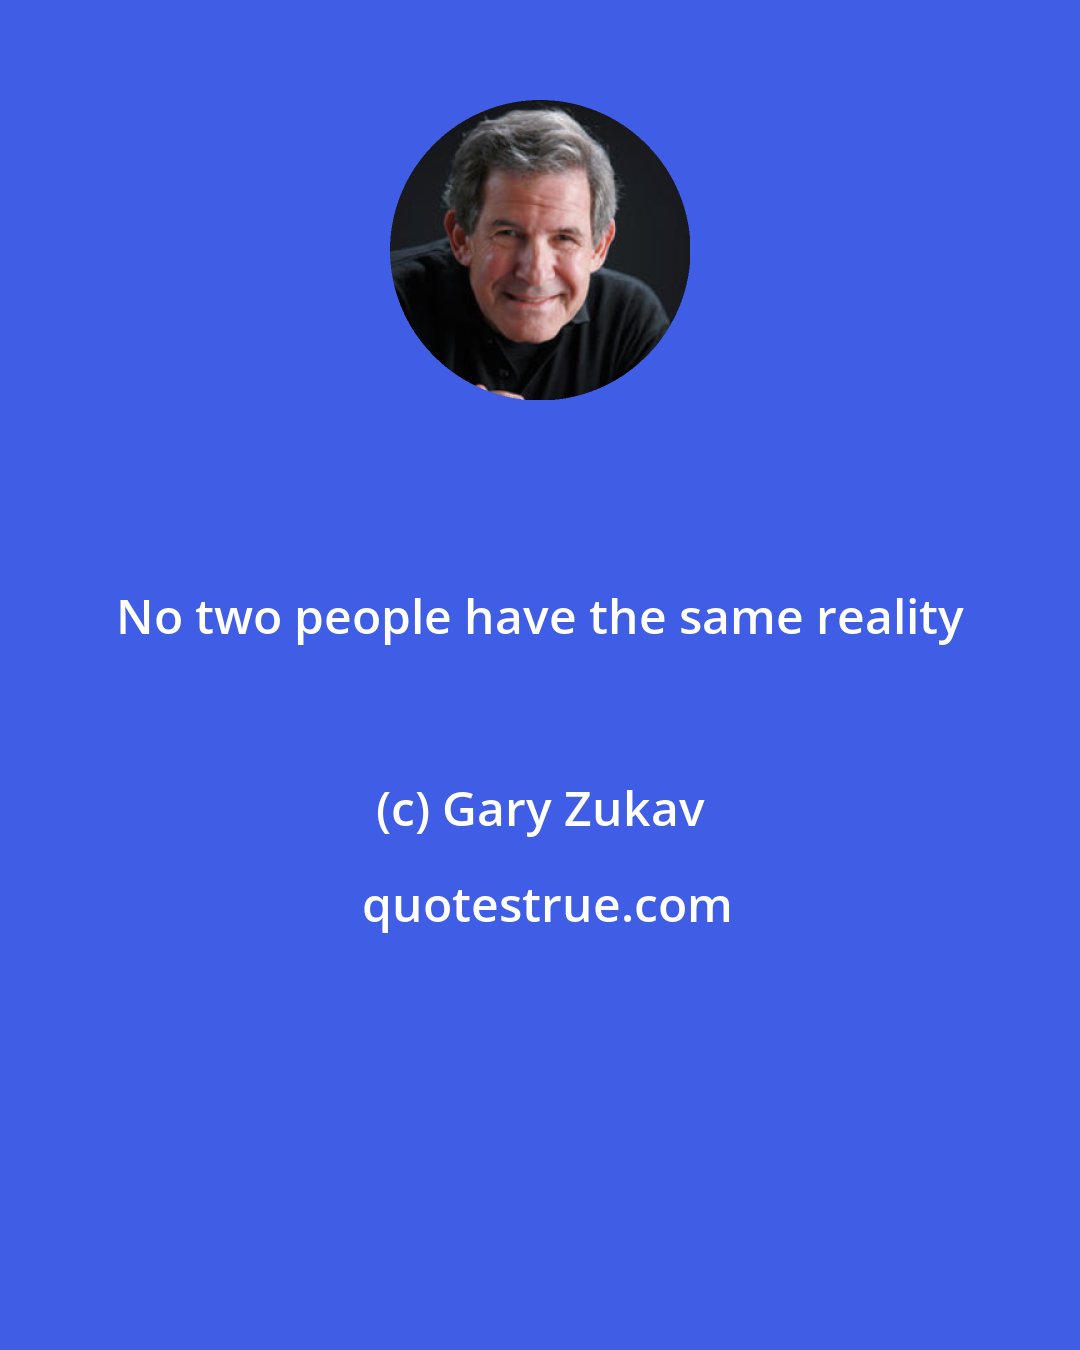 Gary Zukav: No two people have the same reality